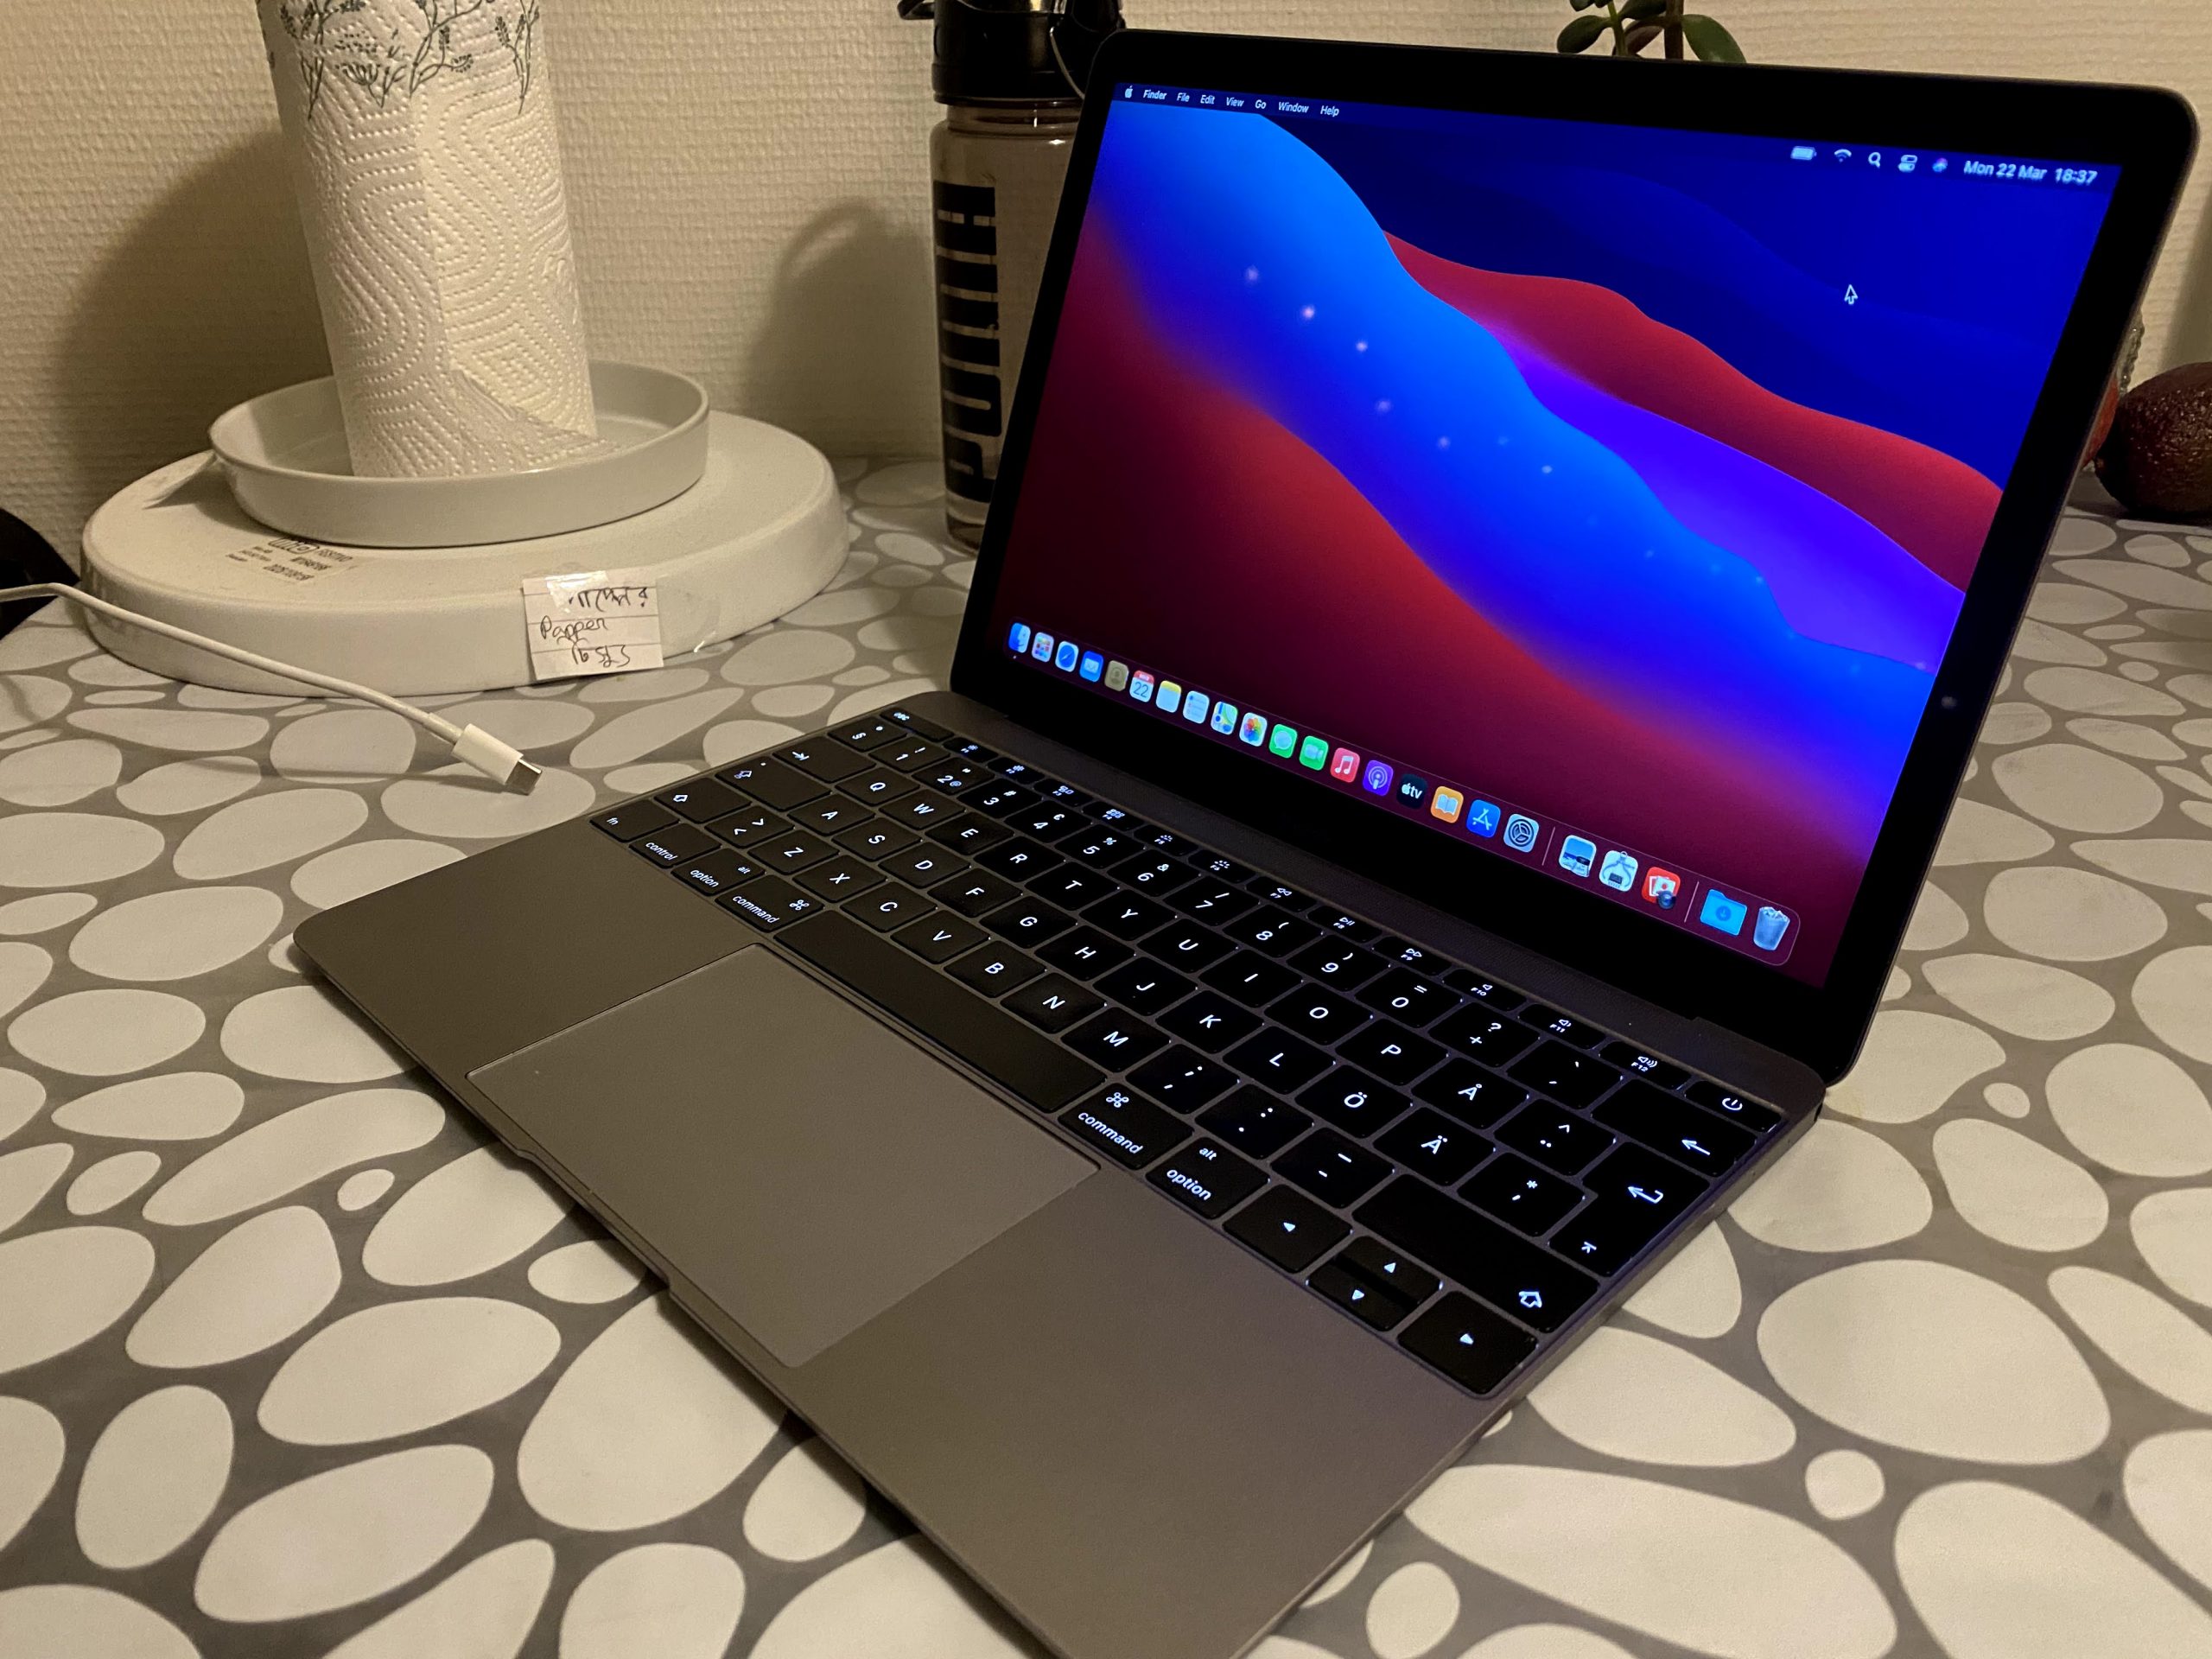 MacBook (Retina, 12 inches, early 2016)